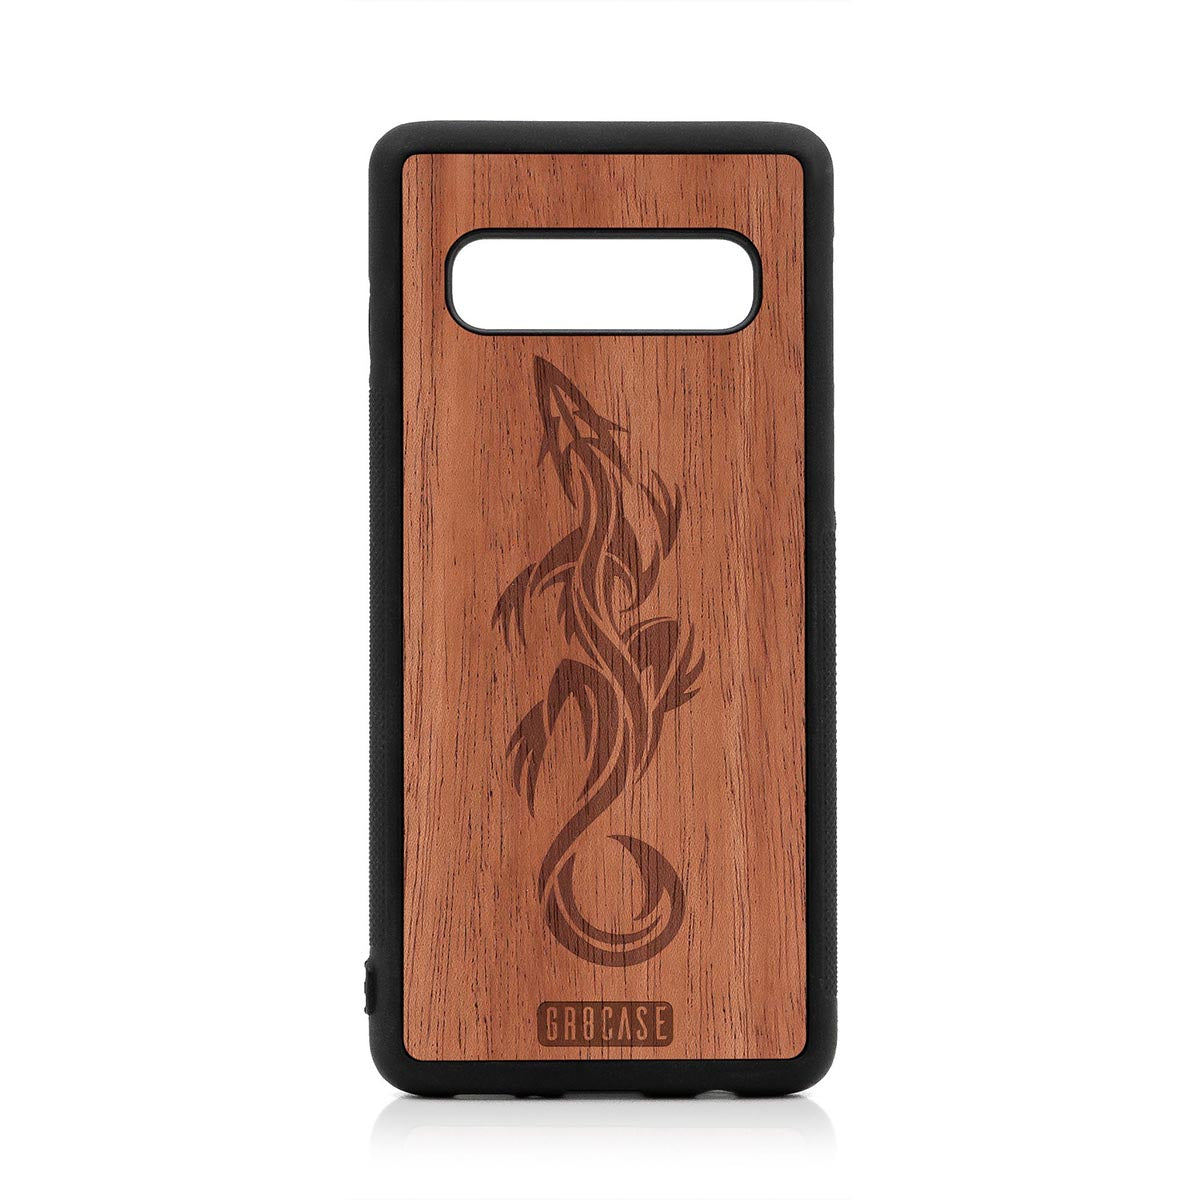 Lizard Design Wood Case For Samsung Galaxy S10 by GR8CASE